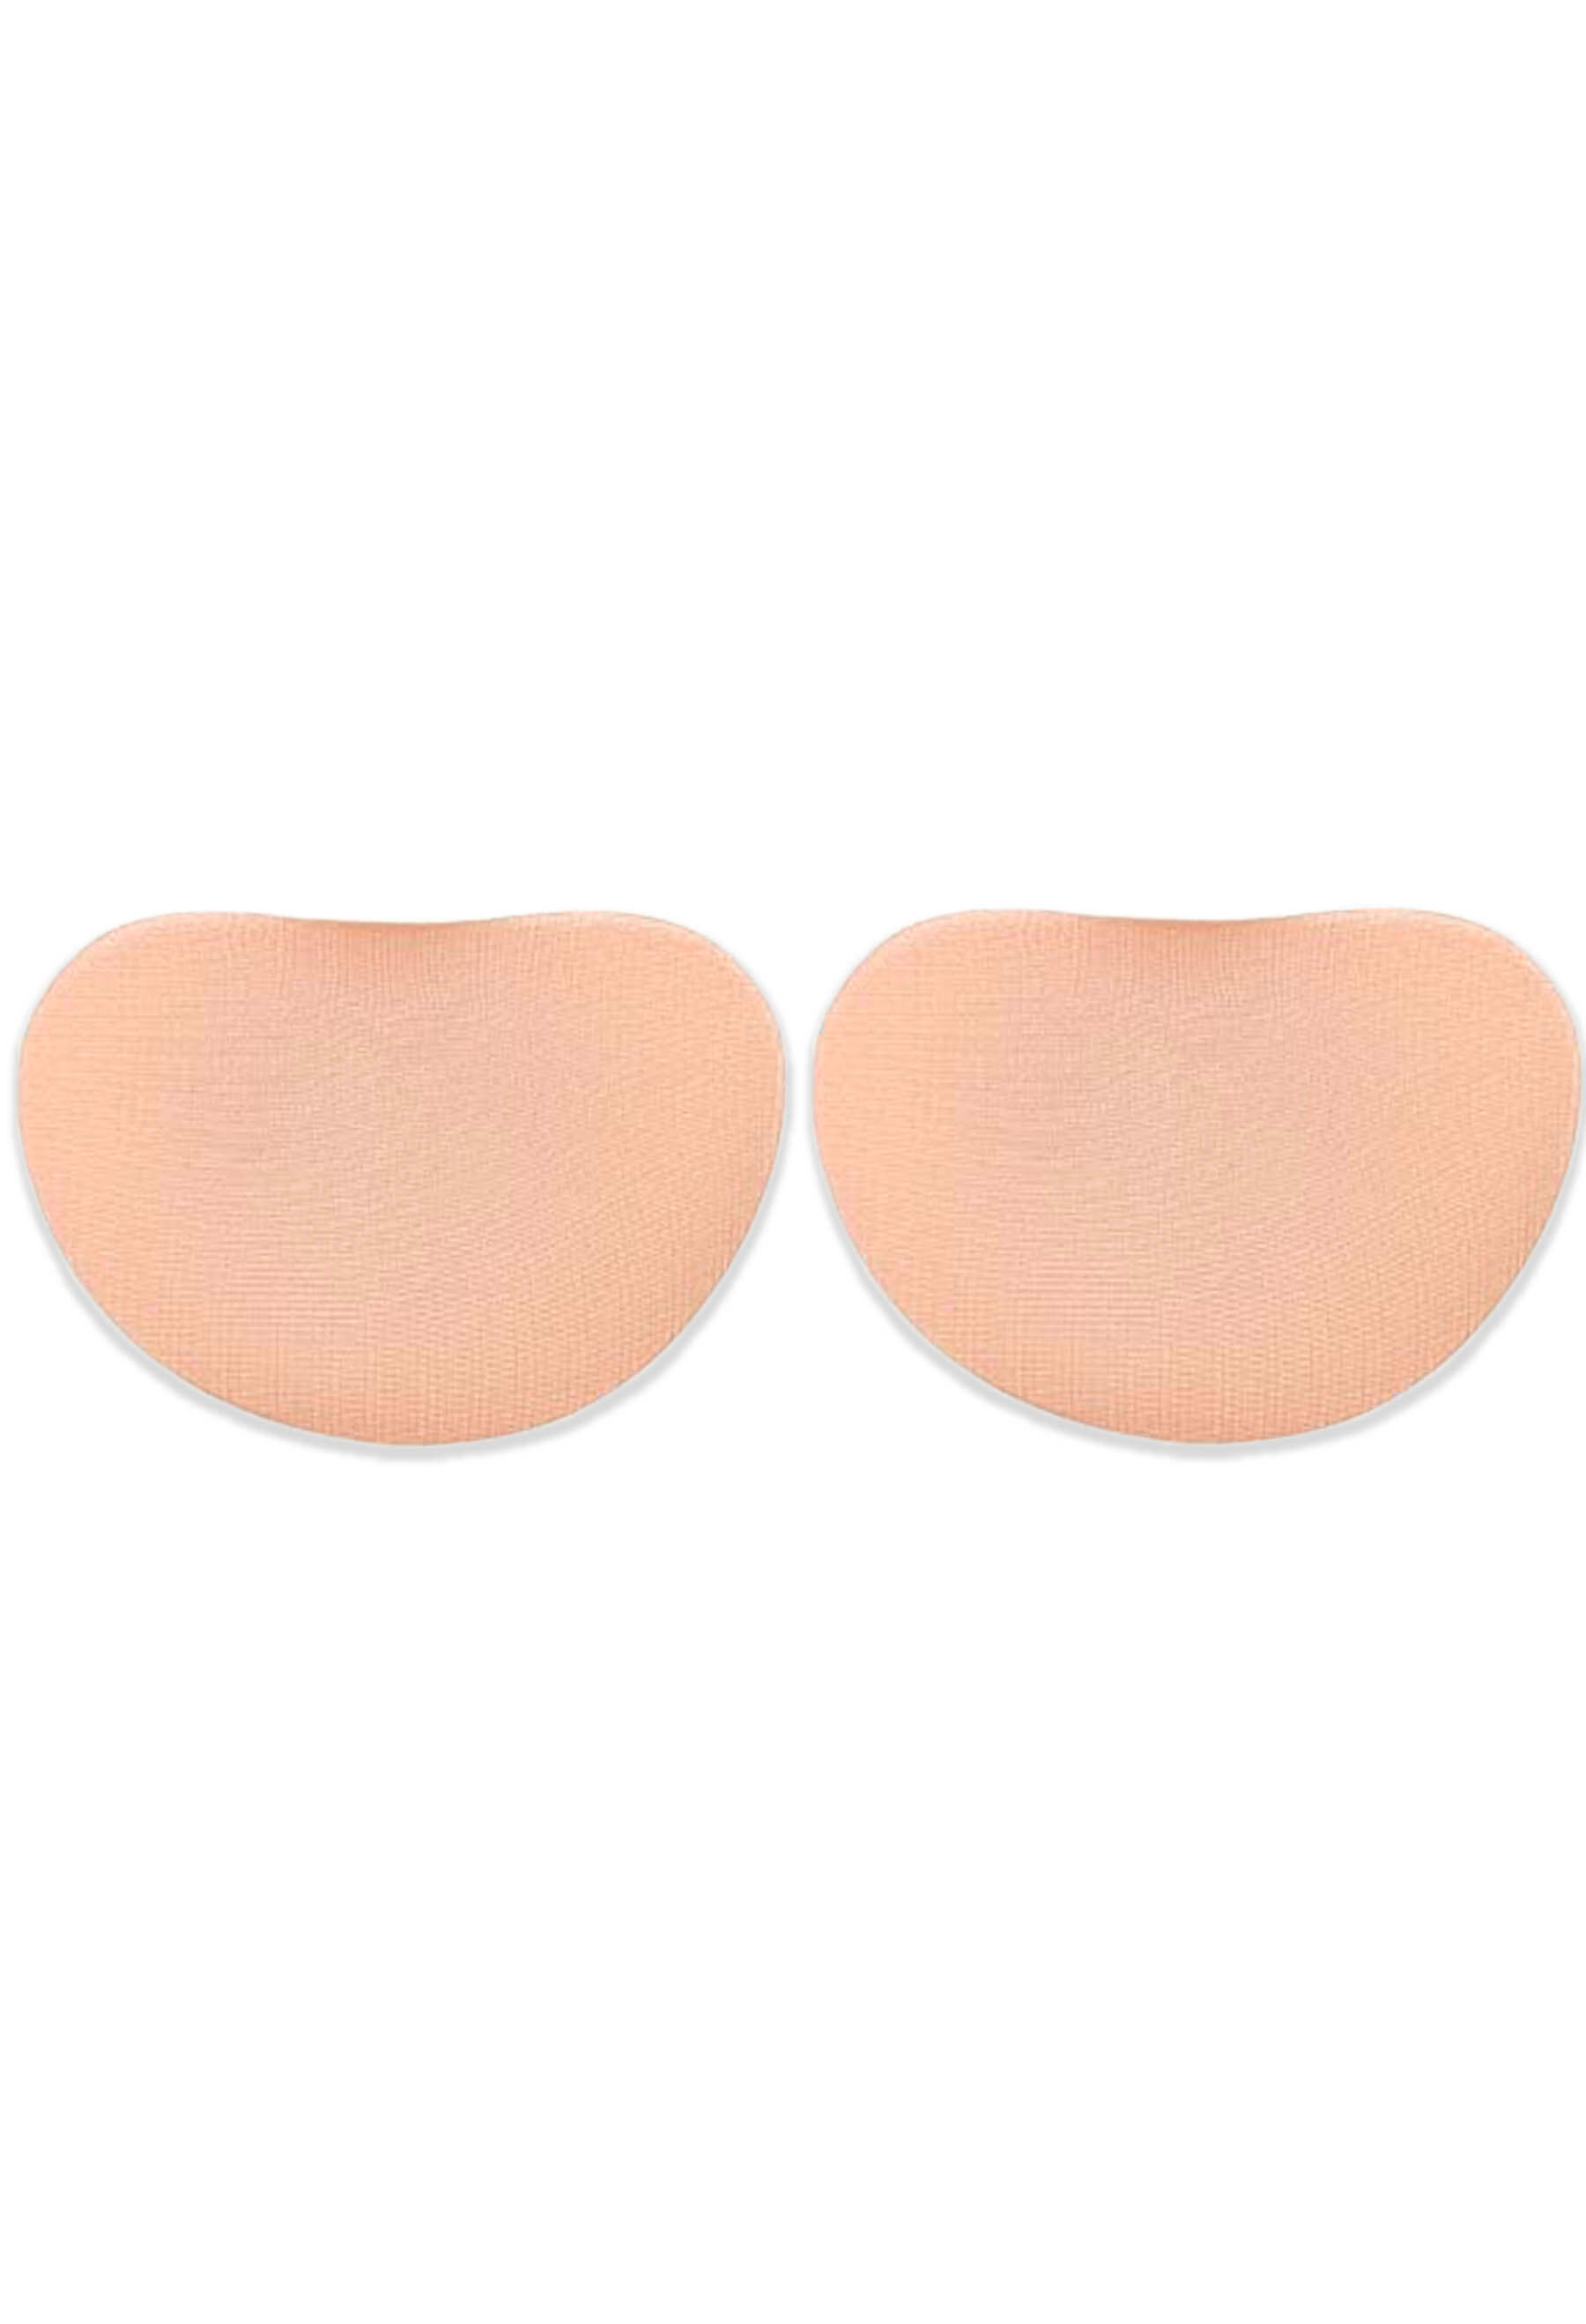 Pair of Foam Bra Pads Breast Form Insert Cleavage Push Up Enhancer